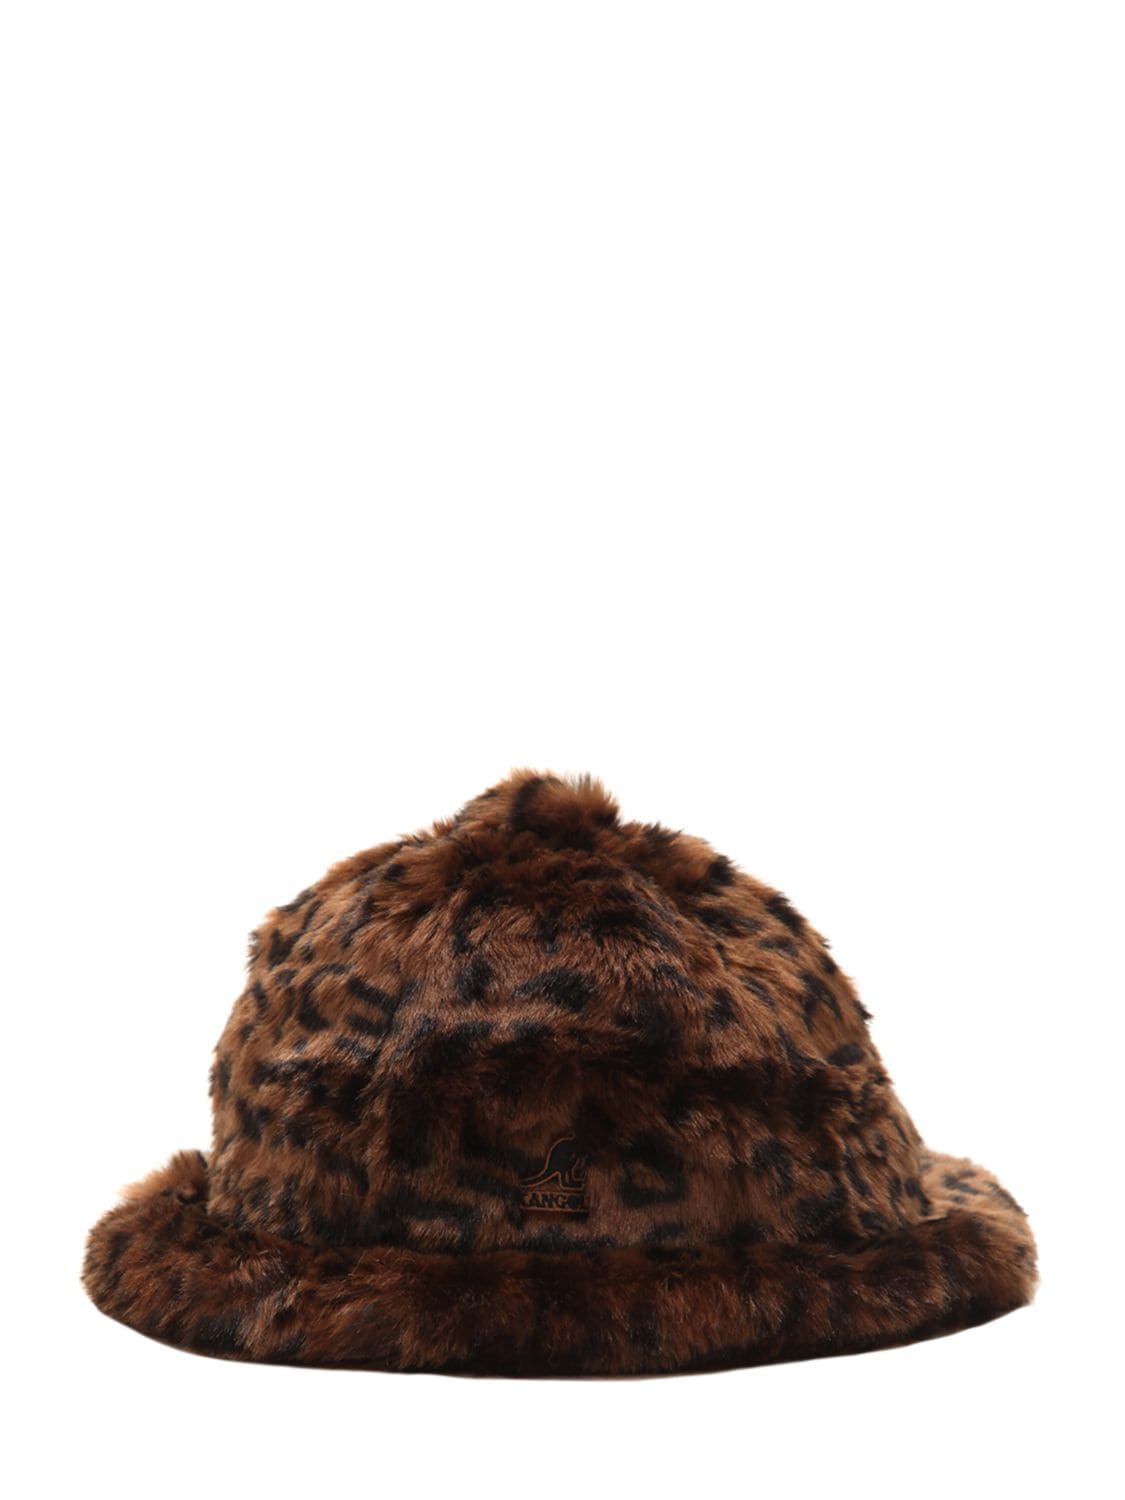 KANGOL 豹纹印花人造皮草帽子,70IWP8006-TEVPUEFSRA2